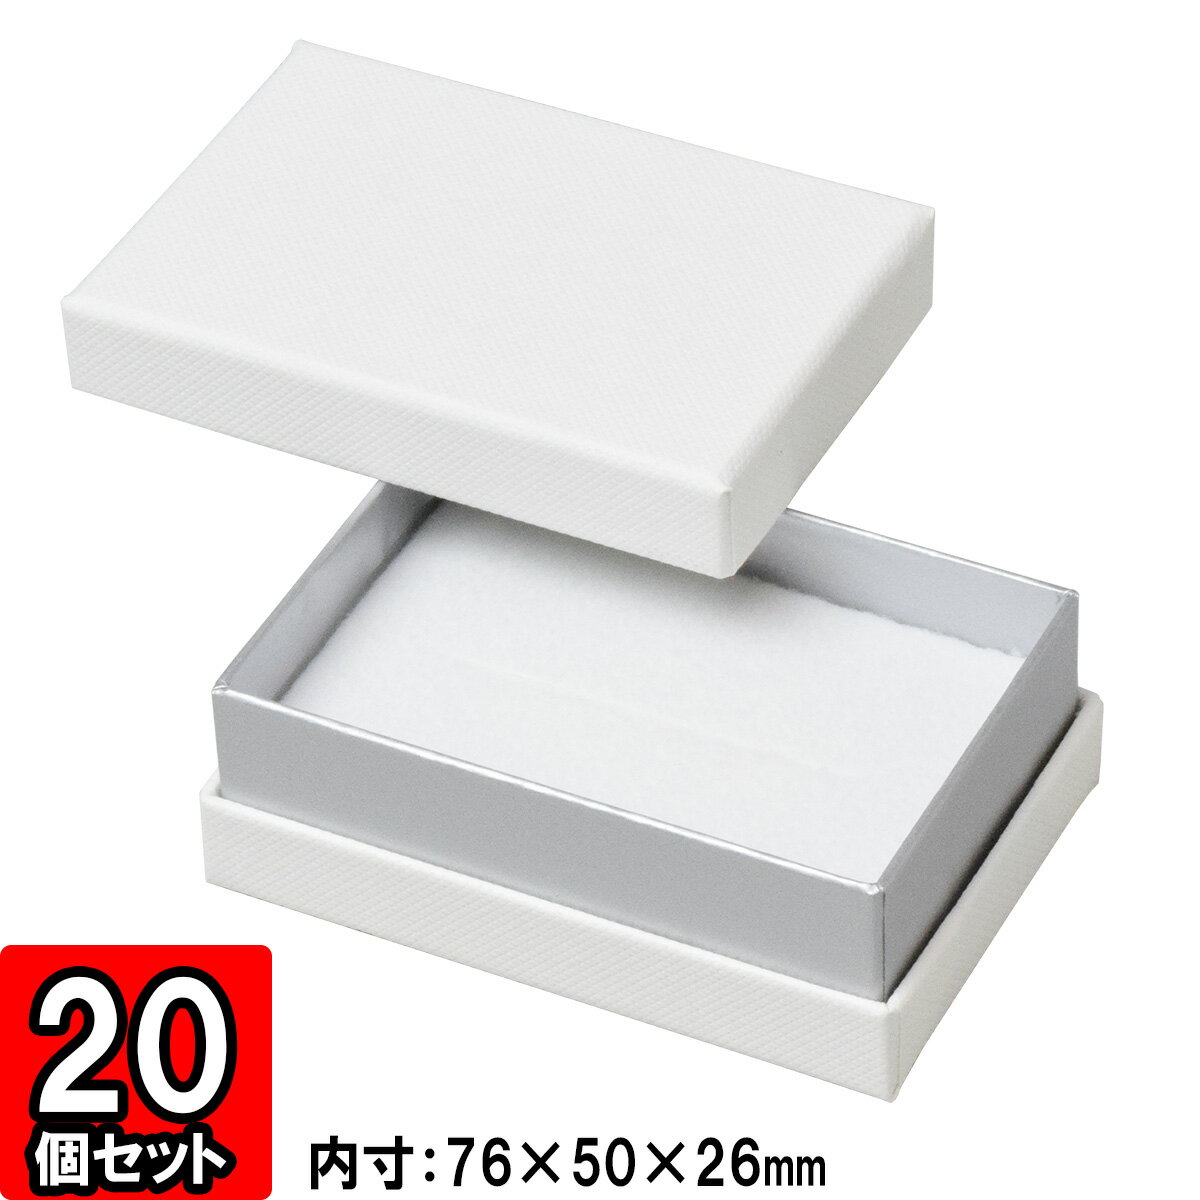 COMBI BOX 20個セット ジュエリーボックス ギフトボックス アクセサリーボックス ギフト プレゼント 宝石 箱 リング 指輪 イヤリング ピアス jewelry box gift box accessory box